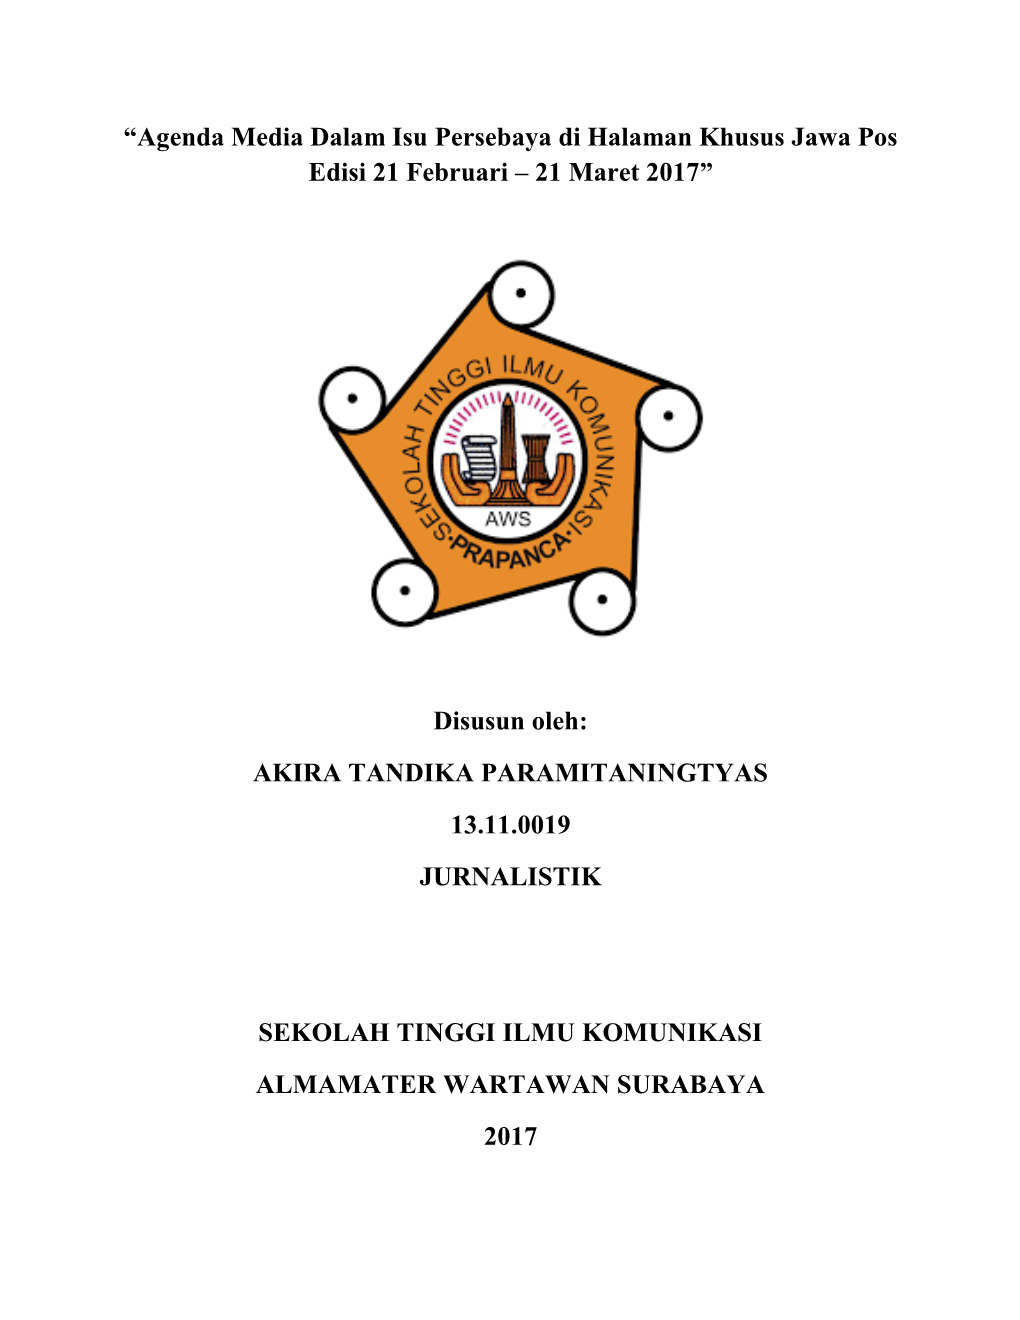 “Agenda Media Dalam Isu Persebaya Di Halaman Khusus Jawa Pos Edisi 21 Februari – 21 Maret 2017” Disusun Oleh: AKIRA TANDIK